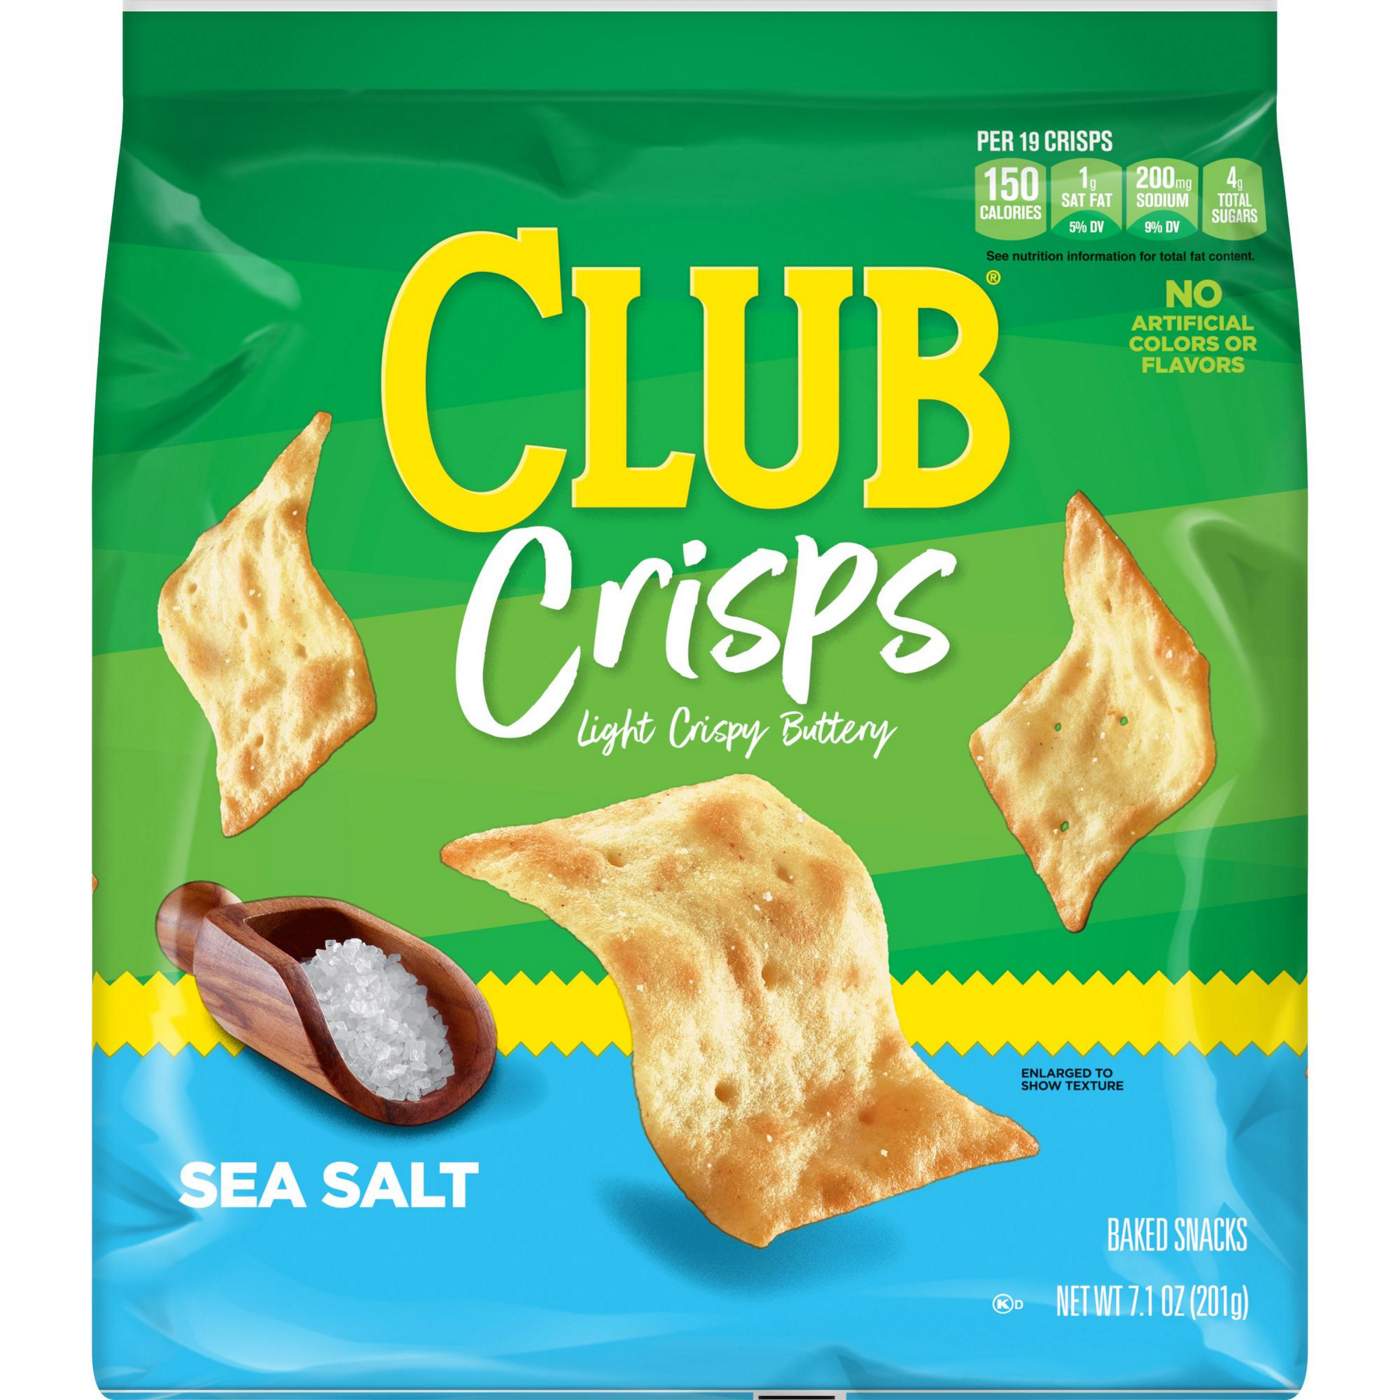 Club Sea Salt Cracker Crisps; image 1 of 5